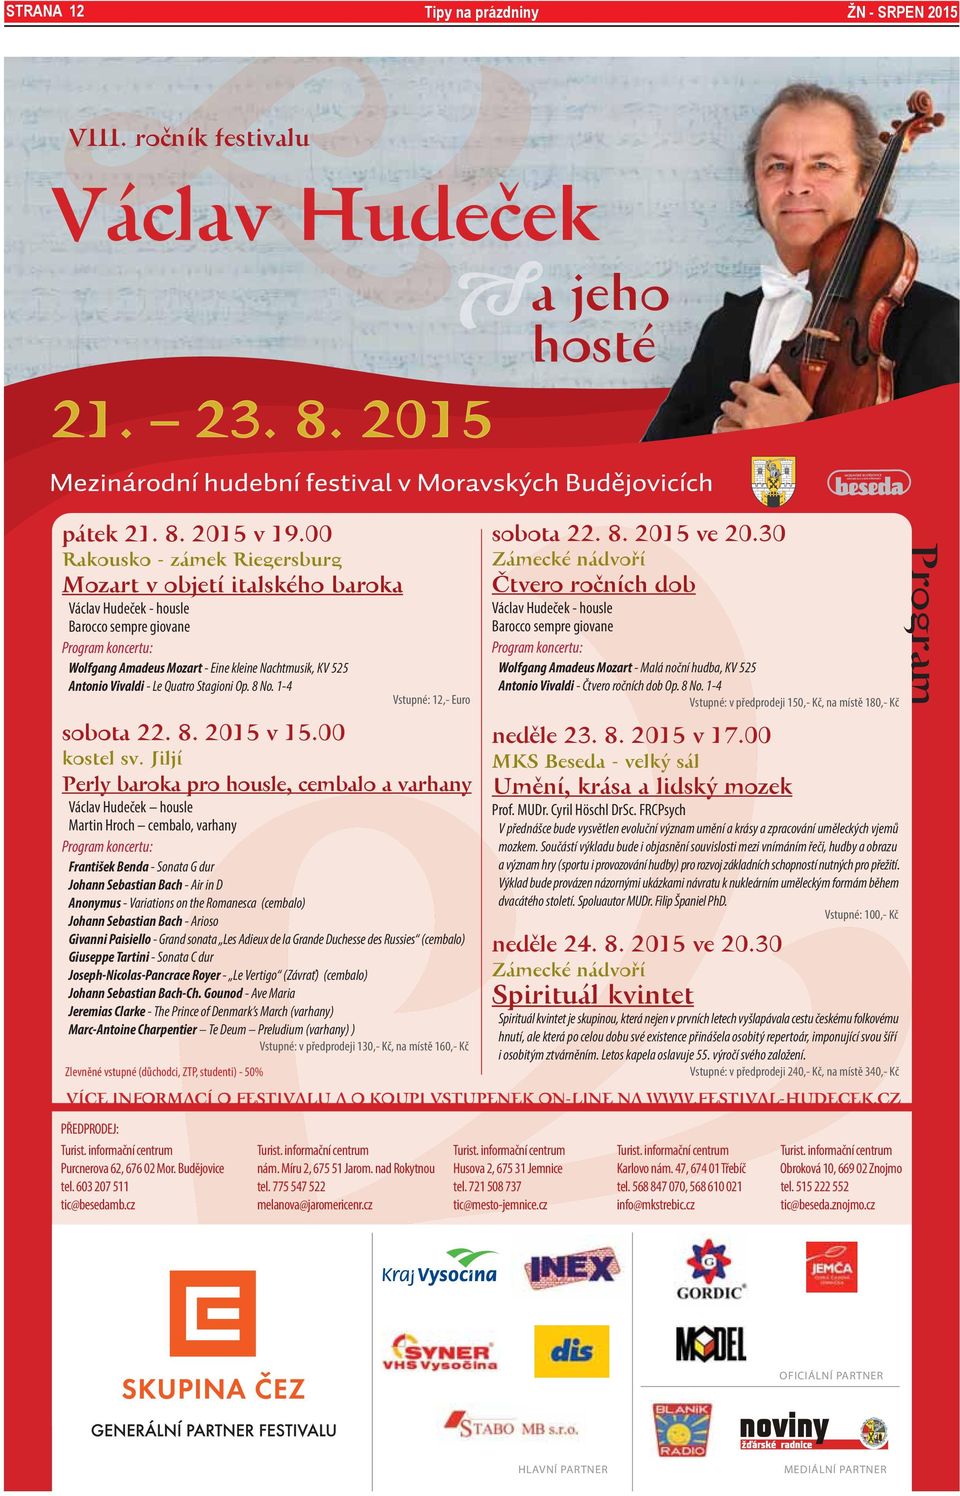 Vivaldi - Le Quatro Stagioni Op. 8 No. 1-4 Vstupné: 12,- Euro sobota 22. 8. 2015 v 15.00 kostel sv.